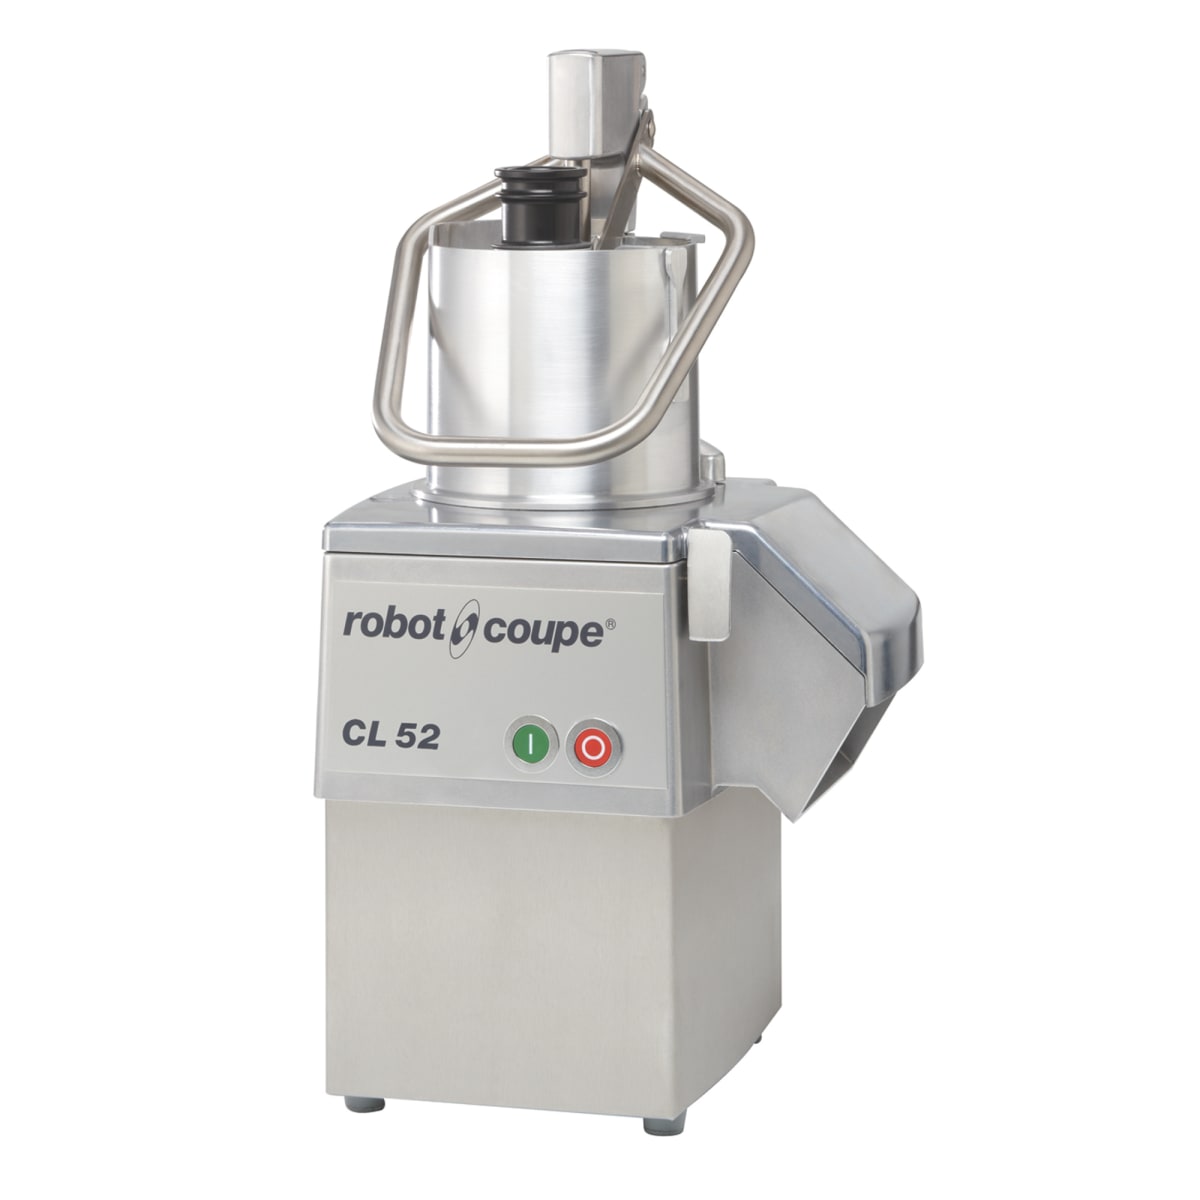 Robot Coupe R2Dice - Combination Food Processor, 3 qt.gray